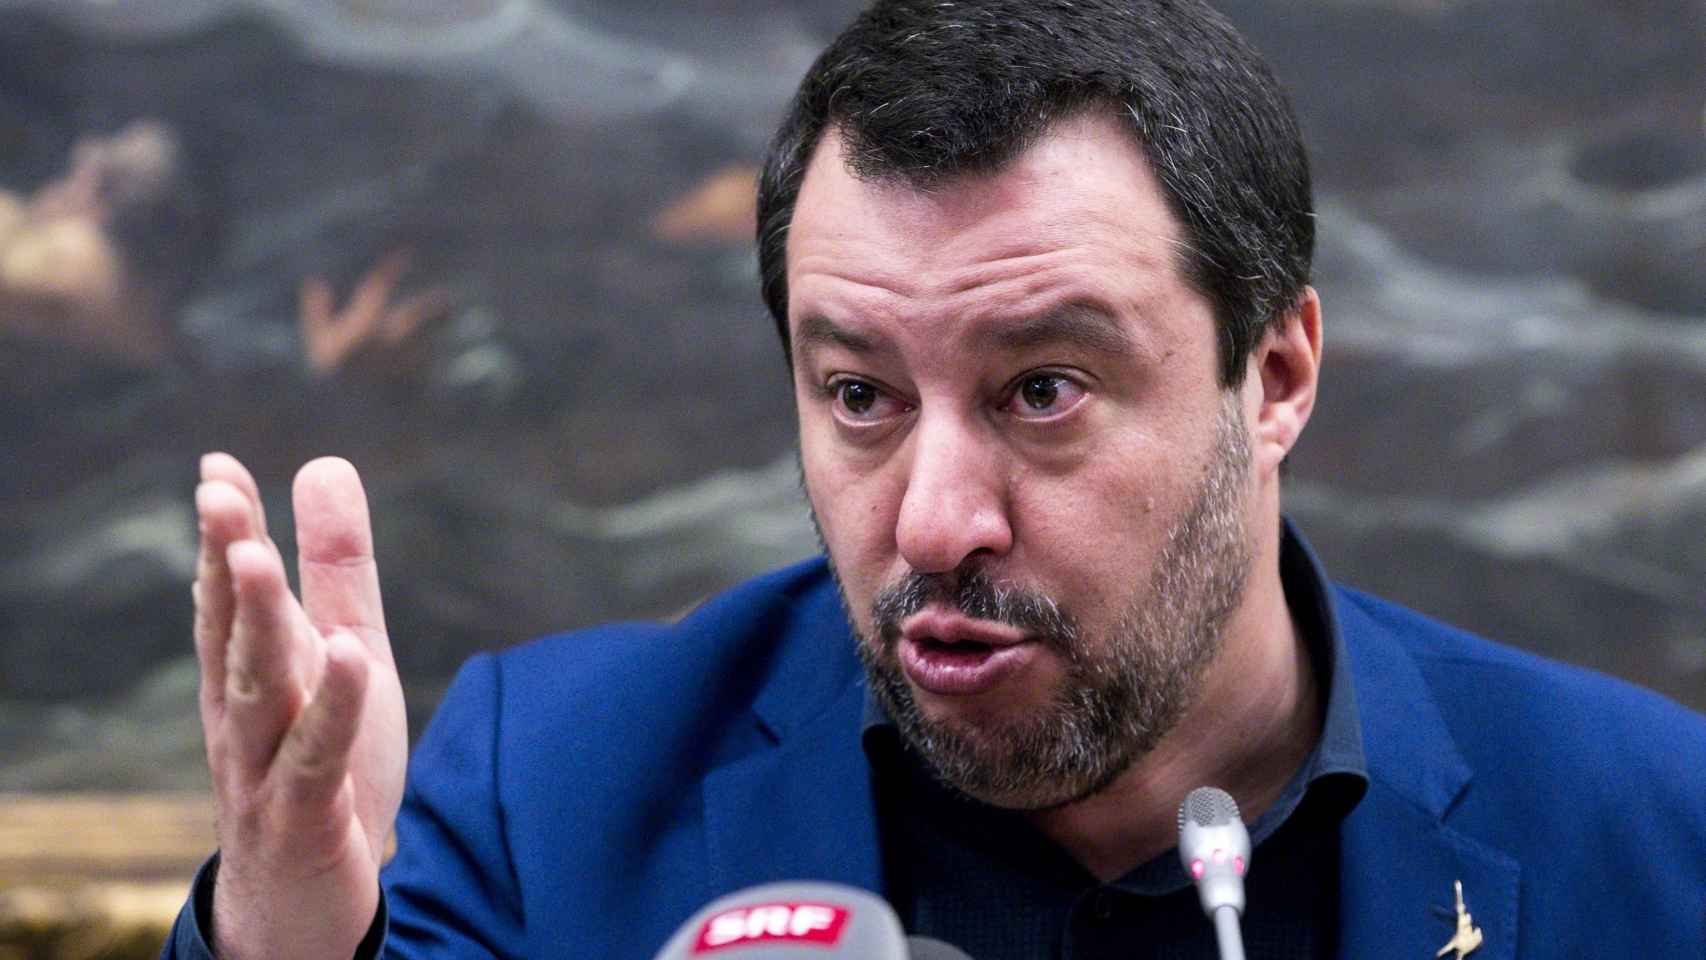 Matteo Salvini, vicepresidente y ministro de Interior de Italia.